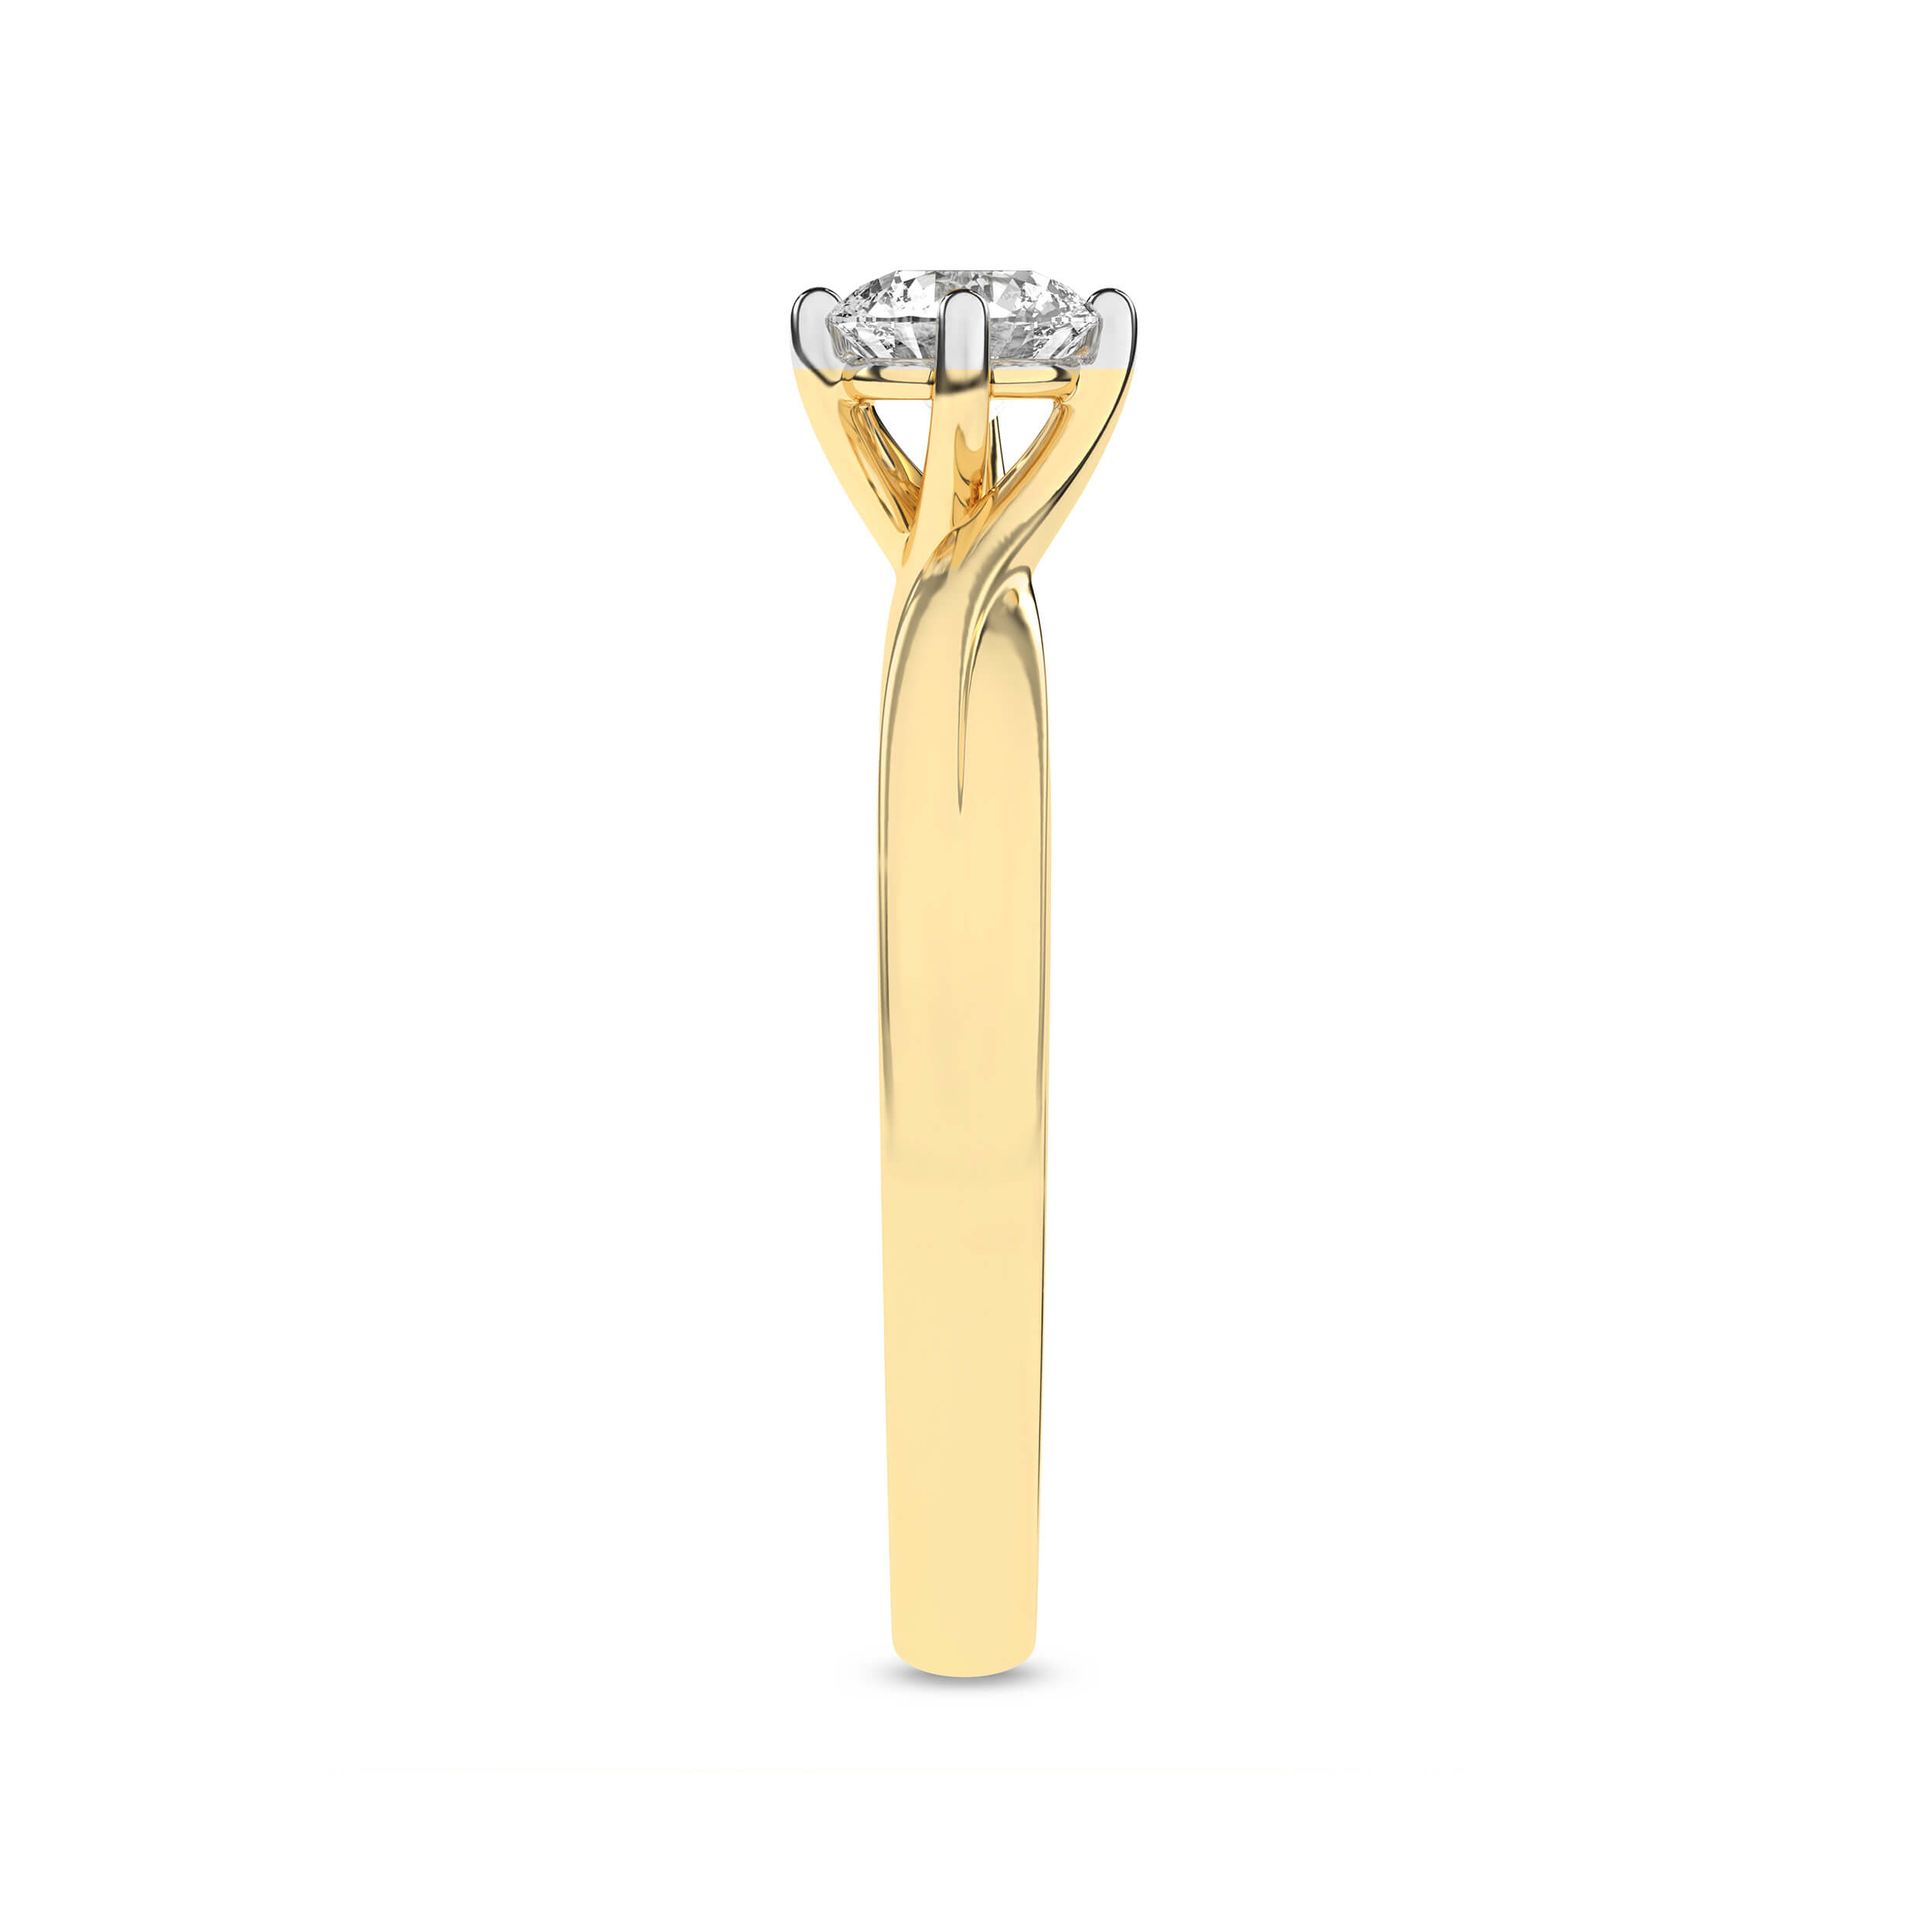 Inel de logodna din Aur Galben 14K cu Diamant 0.33Ct, articol MSD0391EG, previzualizare foto 2